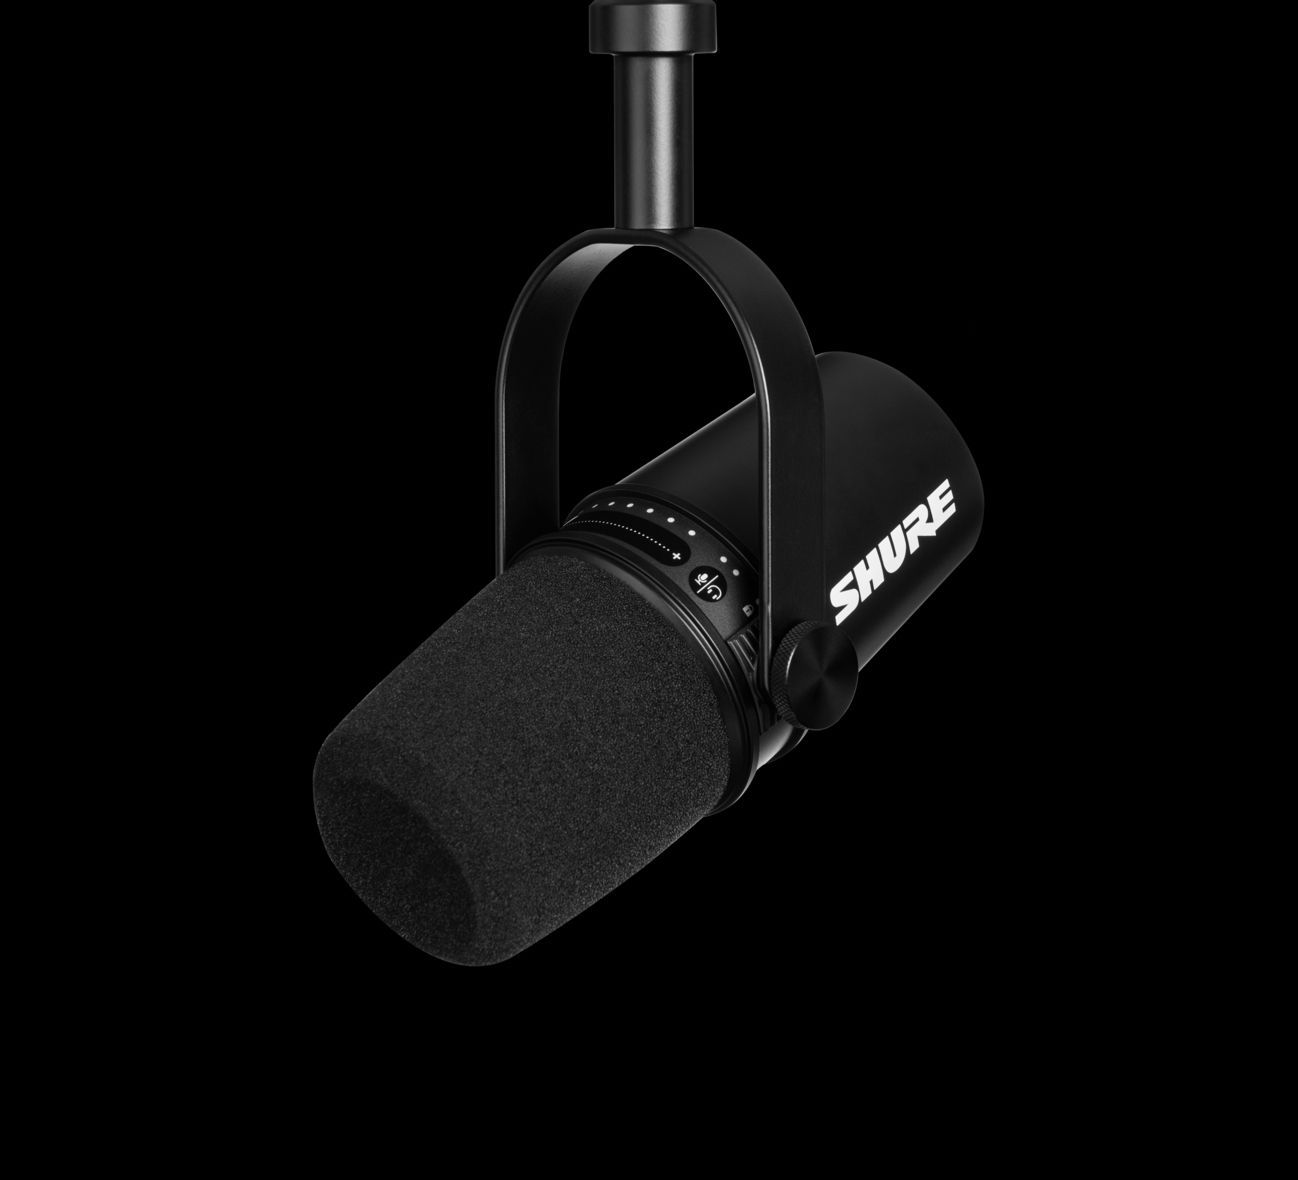 Shure MV 7 Black Motiv Podcast Mikrofon mit USB und XLR, schwarz  - Onlineshop Musikhaus Markstein